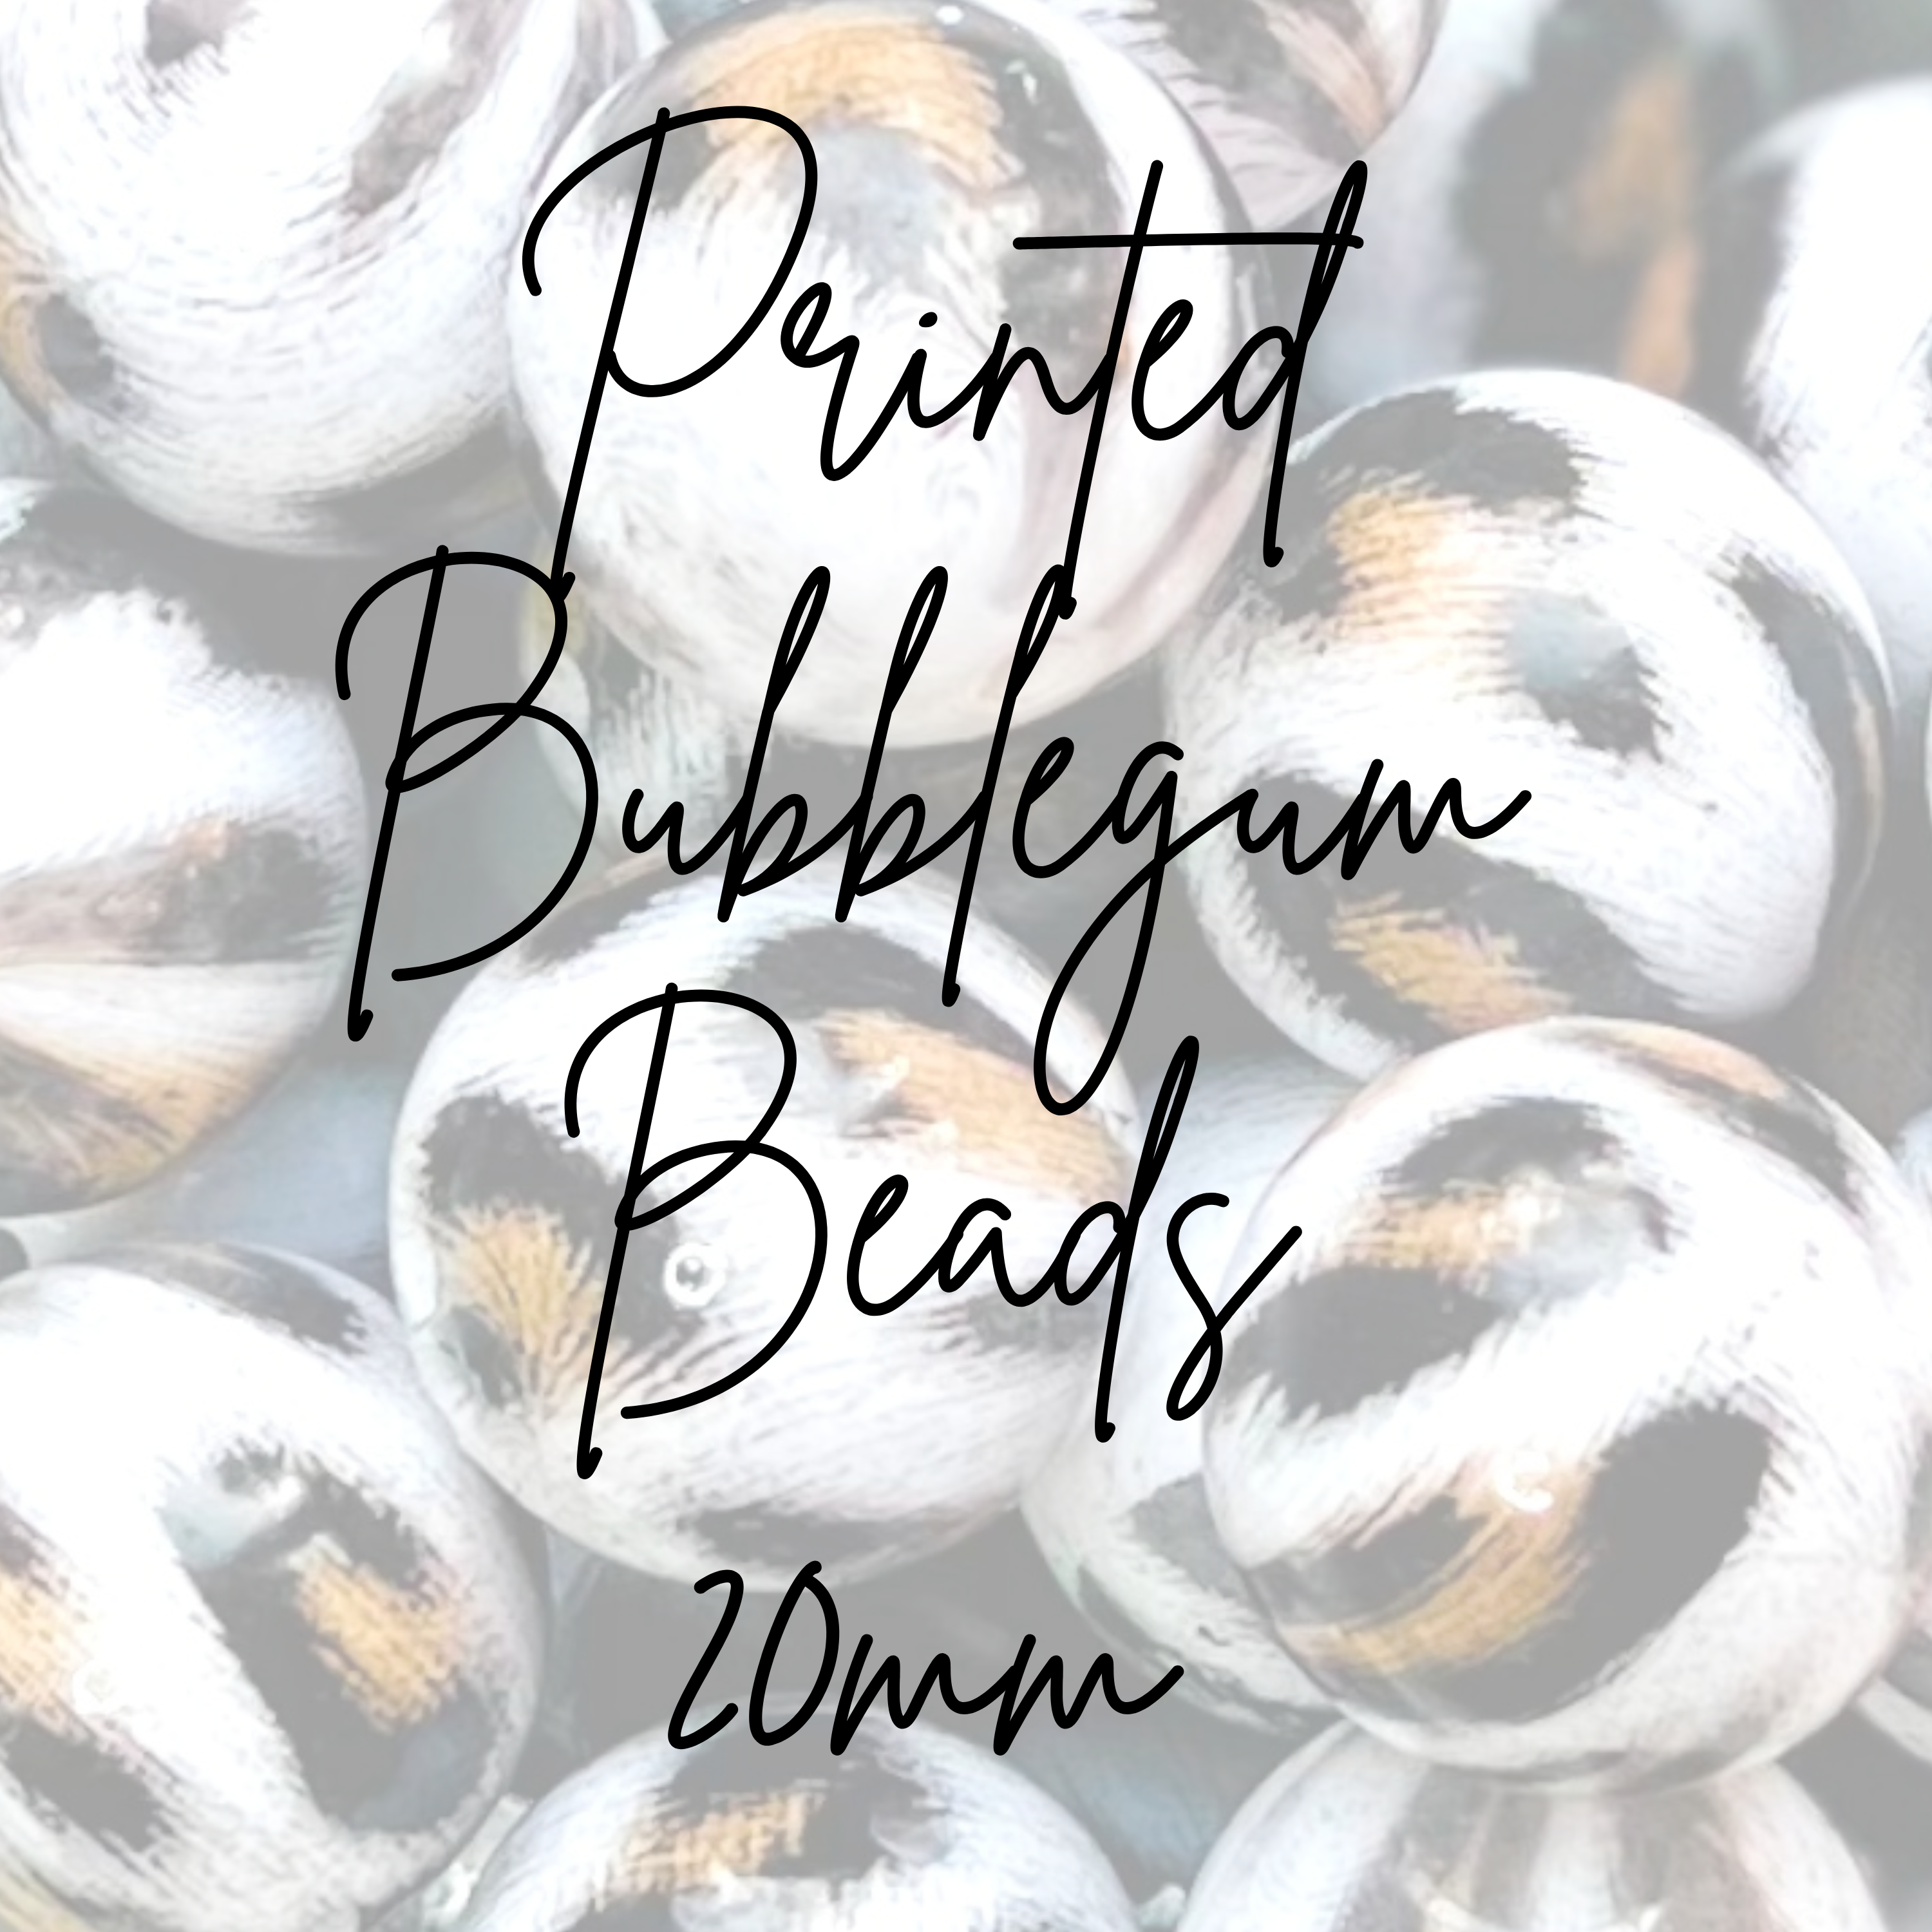 50pcs 20mm Bubblegum Beads Chunk Pen Beads Acrylic Focal Beads